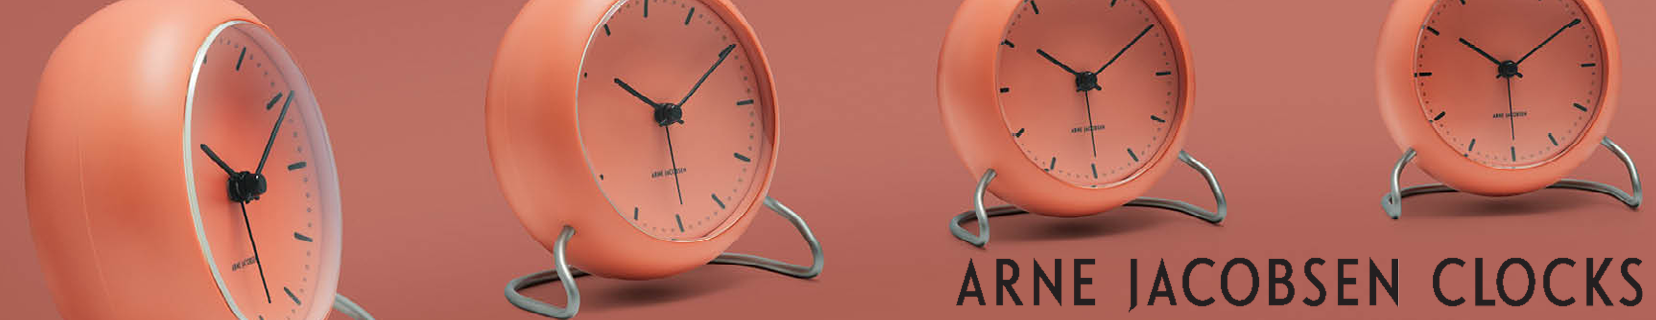 Arne Jacobsen Clocks | Wall clocks | Trendy collections at Boozt.com